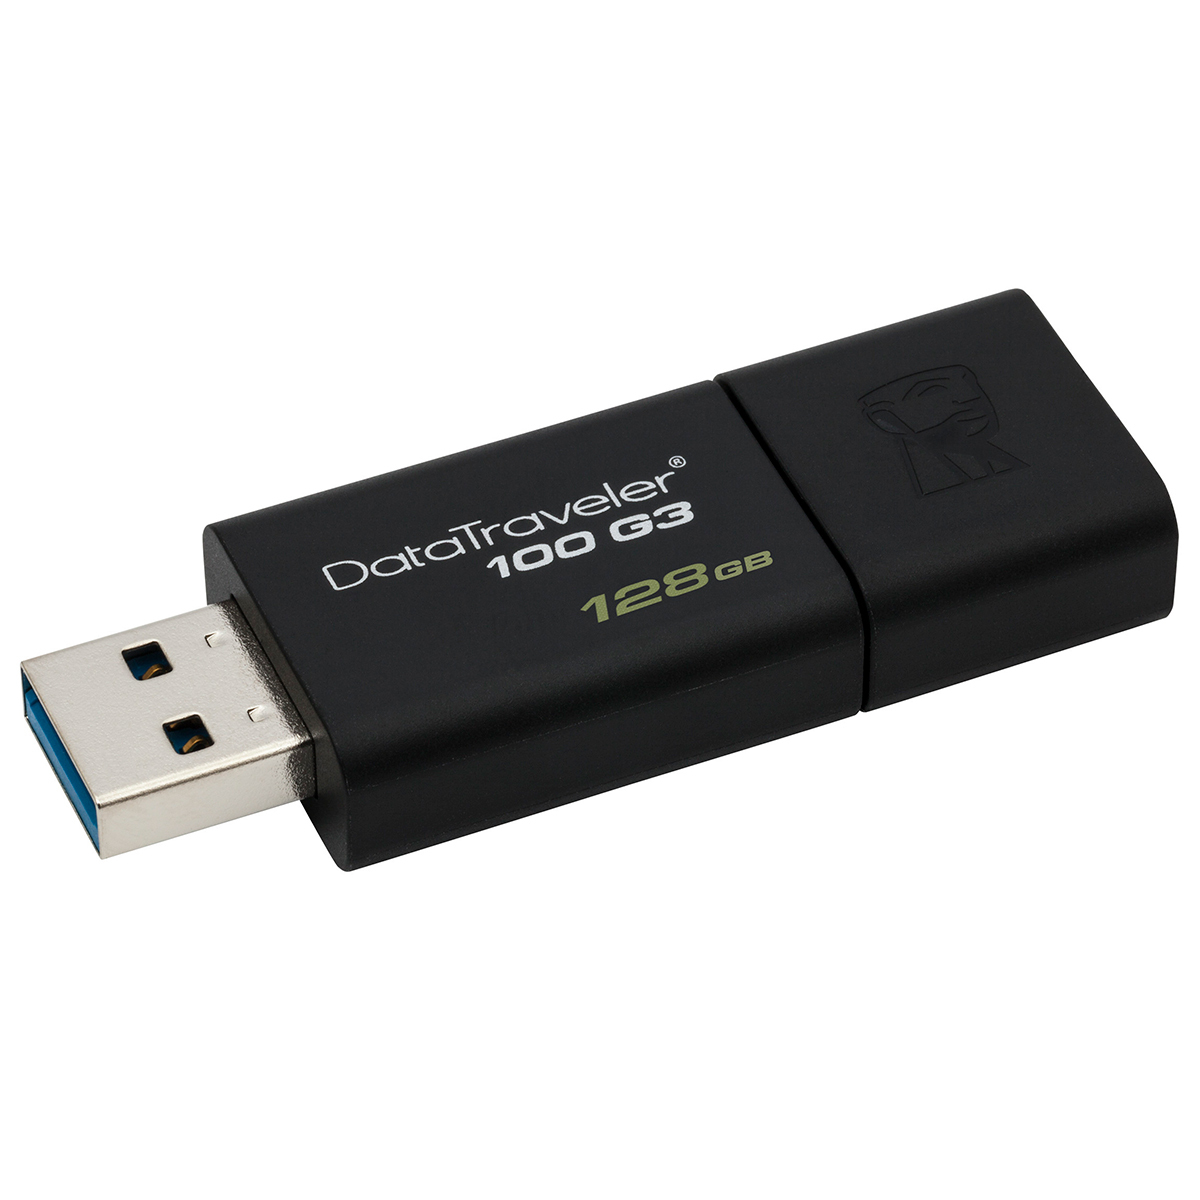 Memoria USB Kingston DataTraveler 100 G3 128gb USB  Negro | Office Depot  Mexico